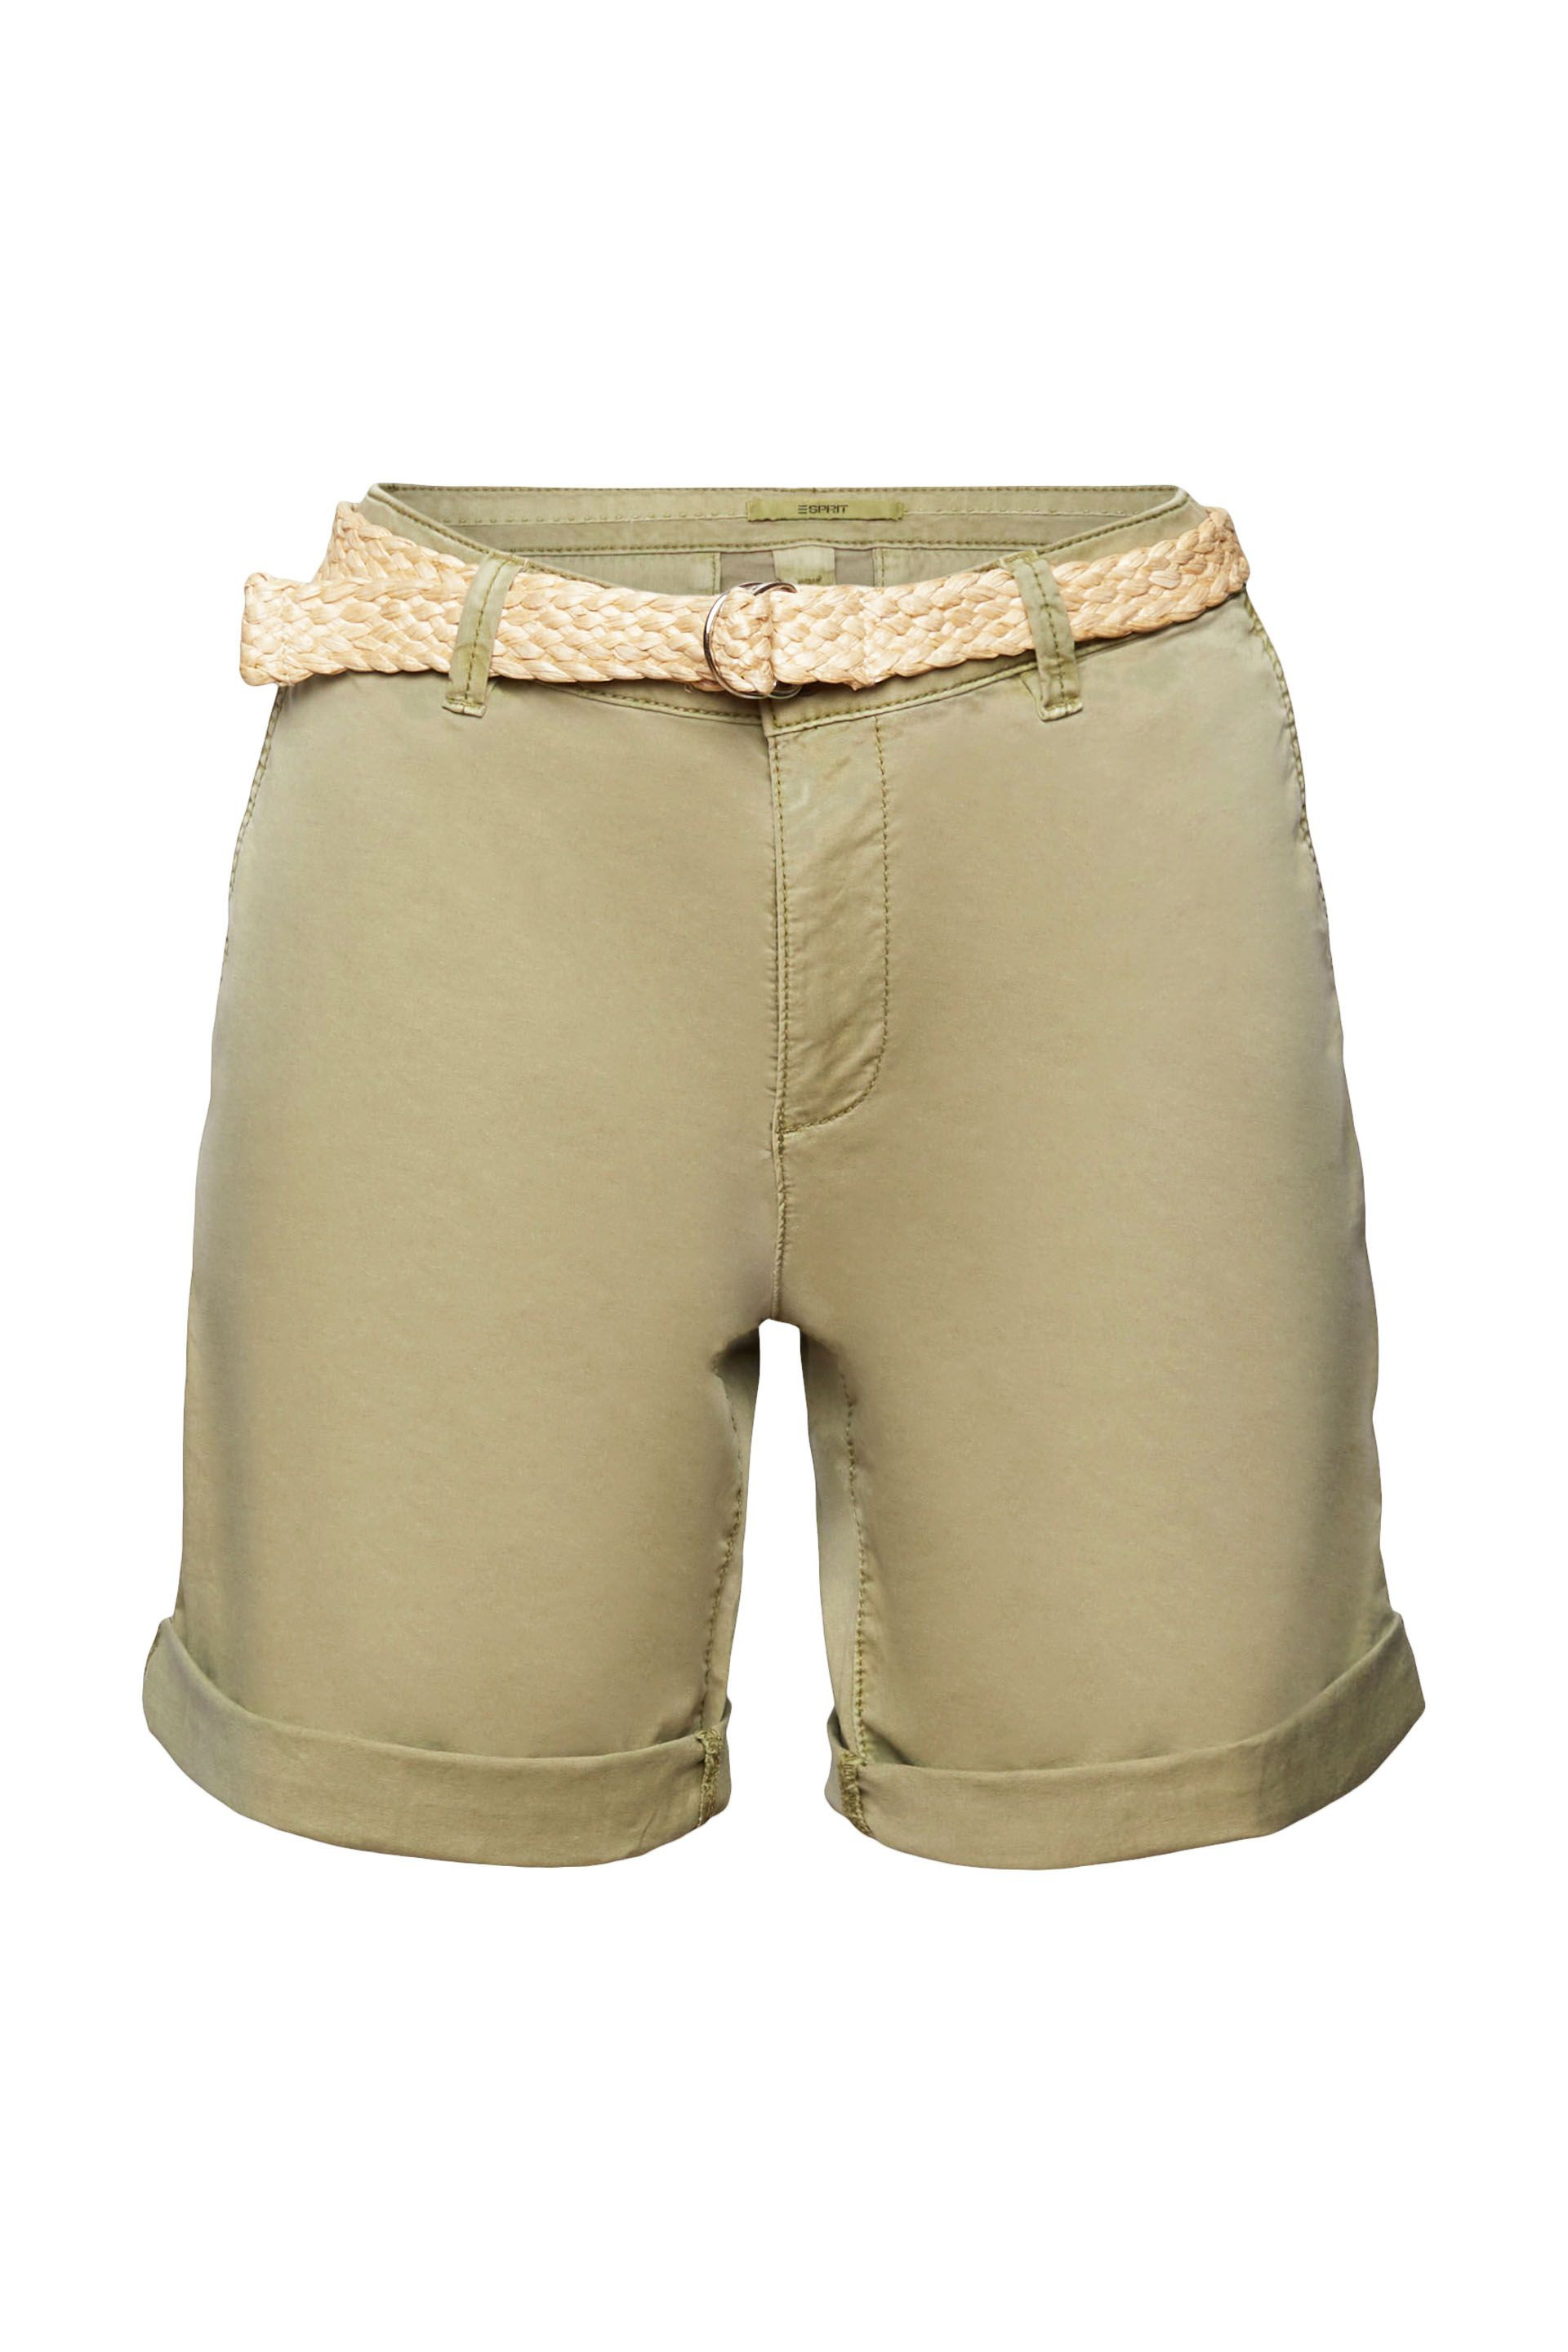 Esprit - Shorts con cintura intrecciata in rafia, Verde, large image number 0